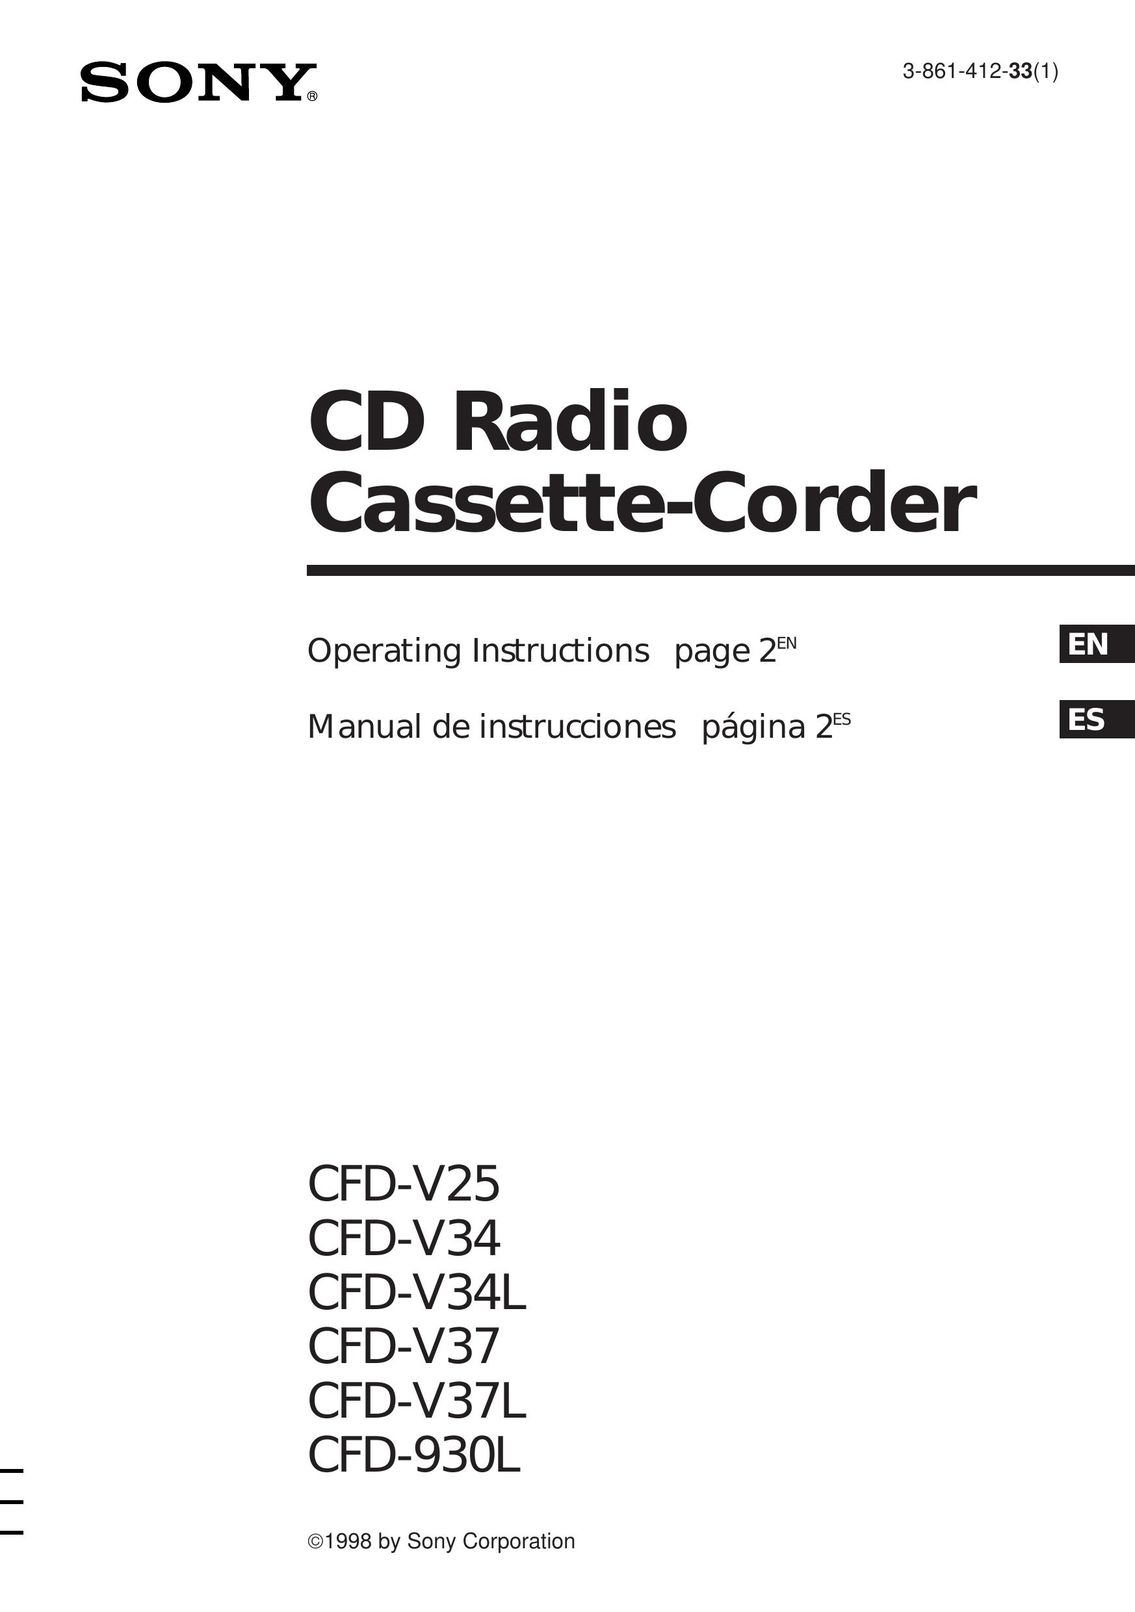 Sony CFD-V34 Cassette Player User Manual